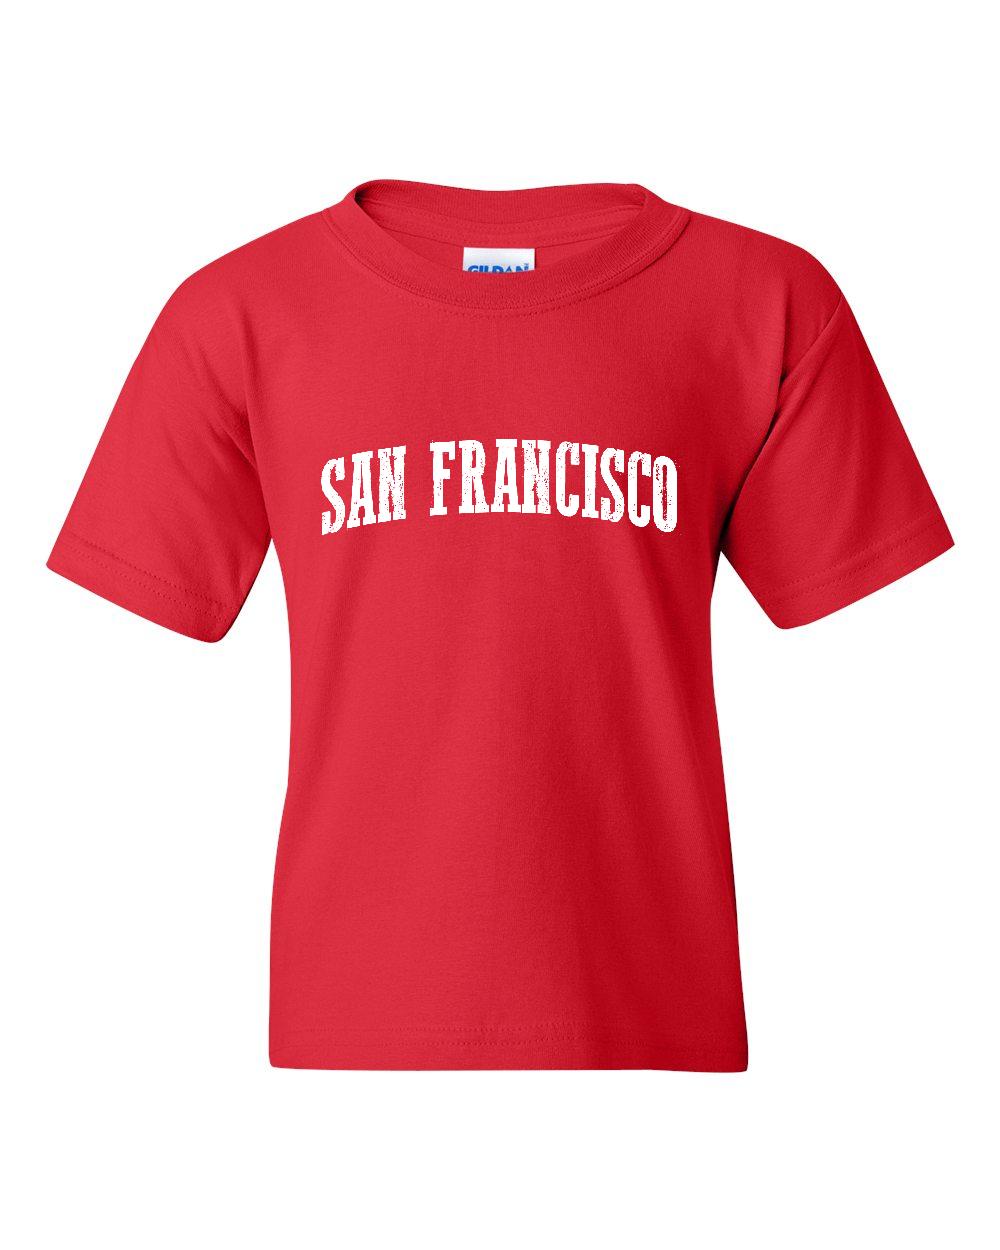 Artix - Big Girls T-Shirts and Tank Tops - San Francisco - image 1 of 5